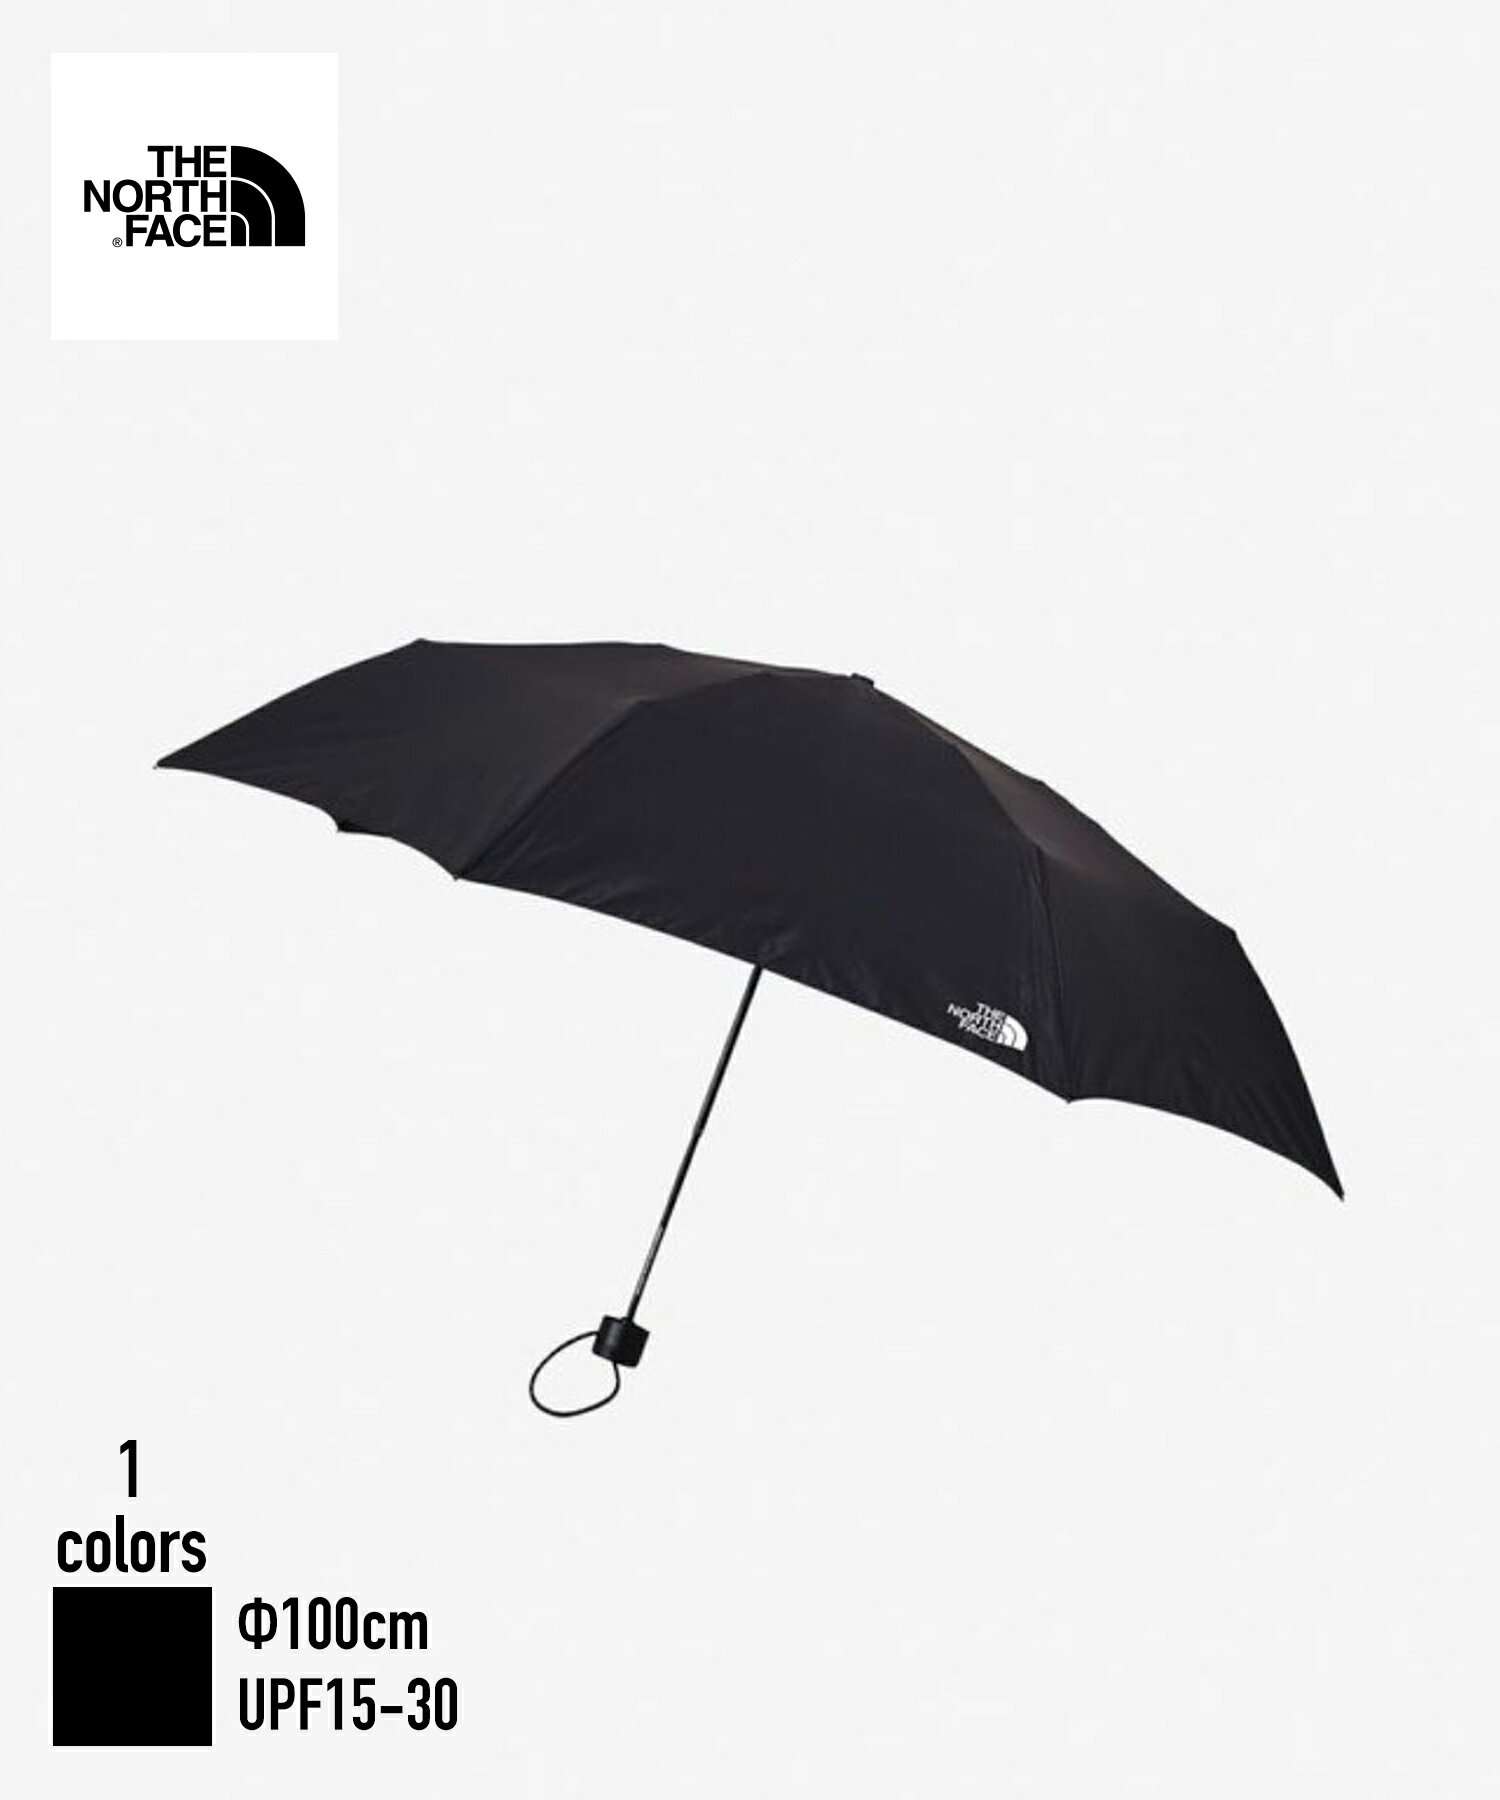 THE NORTH FACE Module Umbrella (NN32438)国内正規品 小物 グッズ 雑貨 傘 折りたたみ式 コンパクト アウトドア 日よけ 紫外線カット 雨の日 梅雨 雨天 雨具 ロゴ ポリエステル ブラック ベージュ 24SP 新作